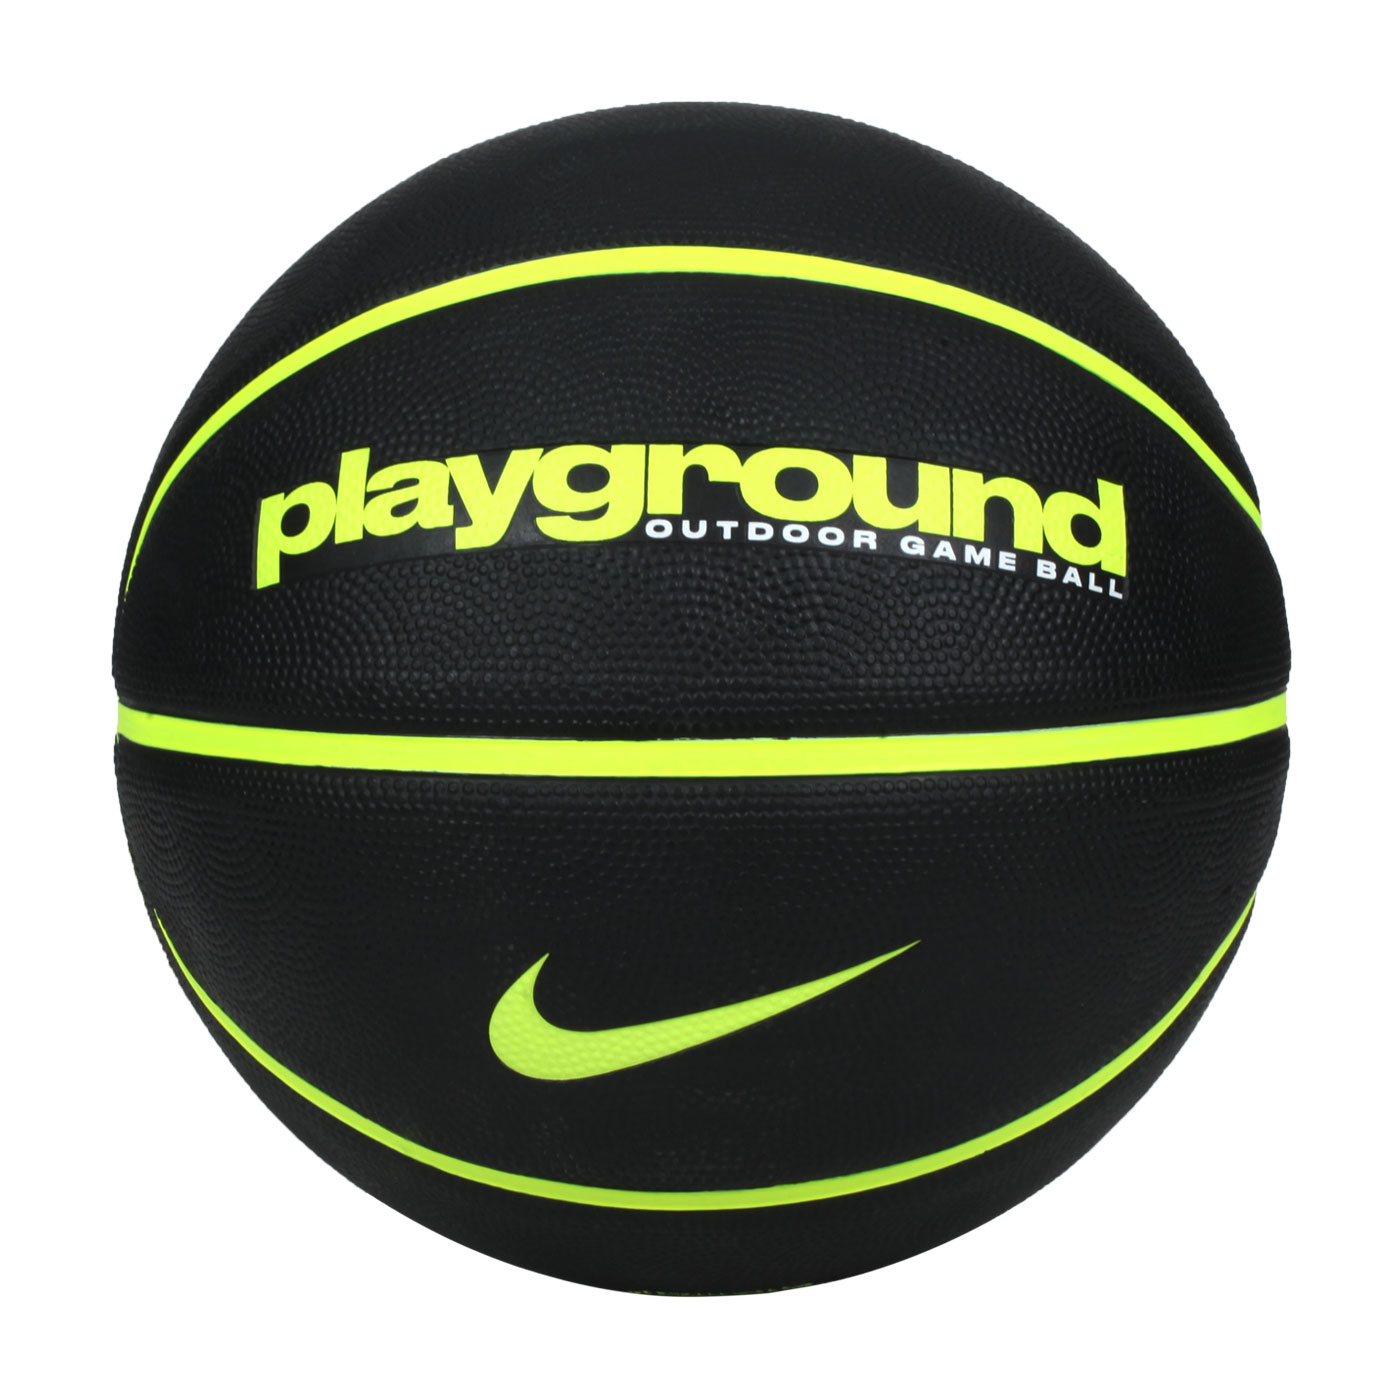 NIKE EVERYDAY PLAYGROUND 8P 7號籃球 N100449808507 - 黑螢光綠